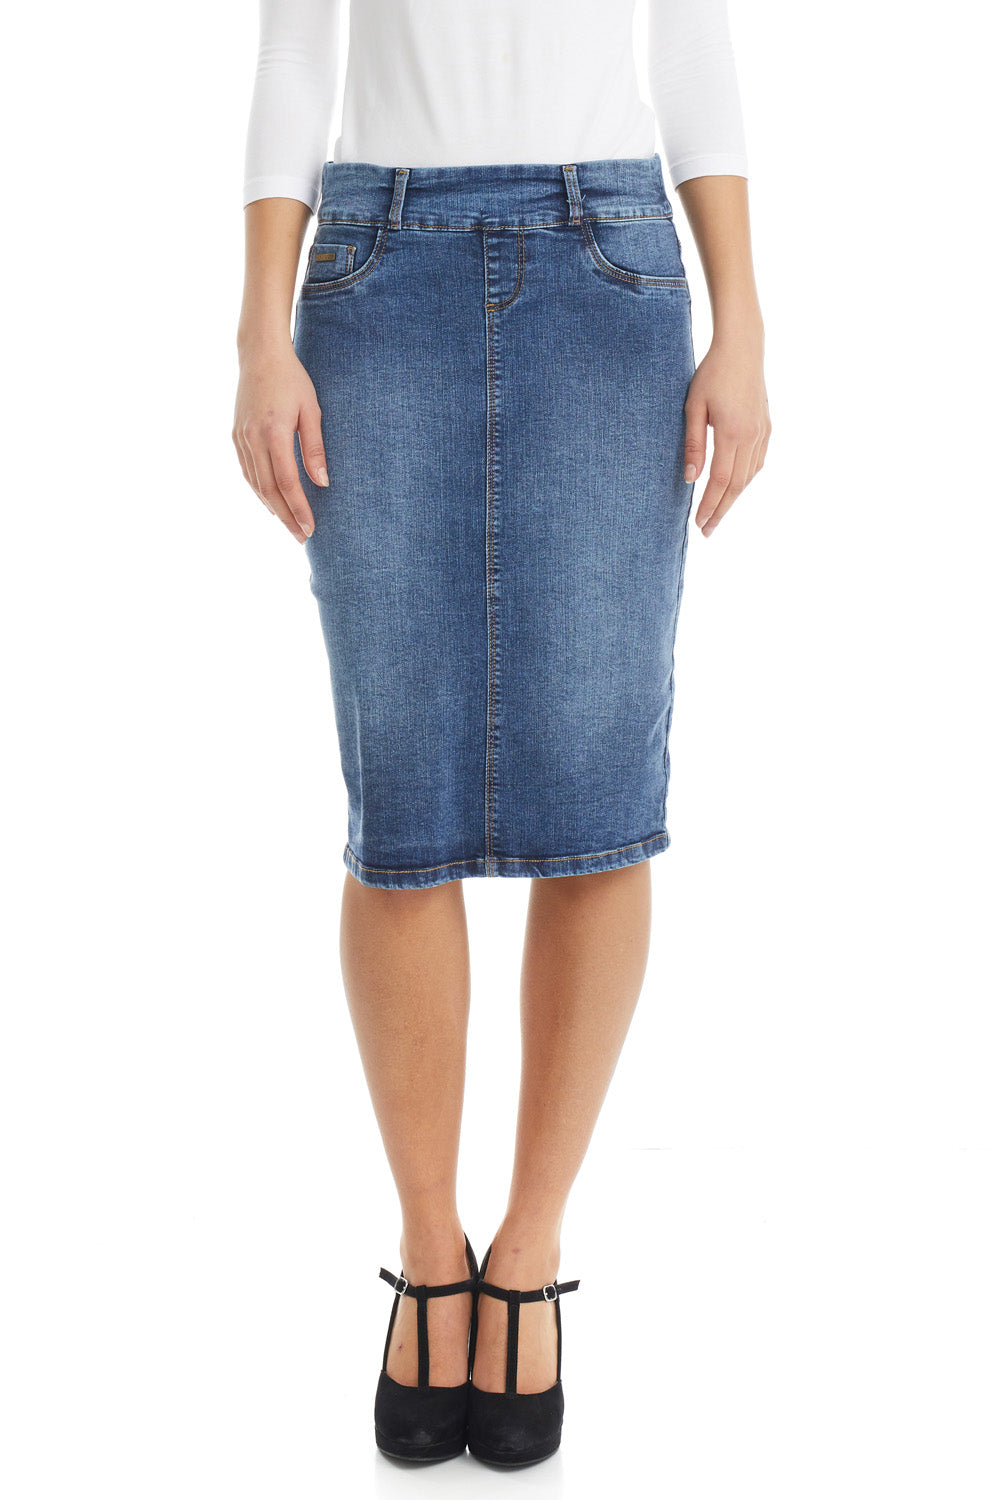 Denim Jean Skirt - Regular and Plus Size 'Boston' EX802182